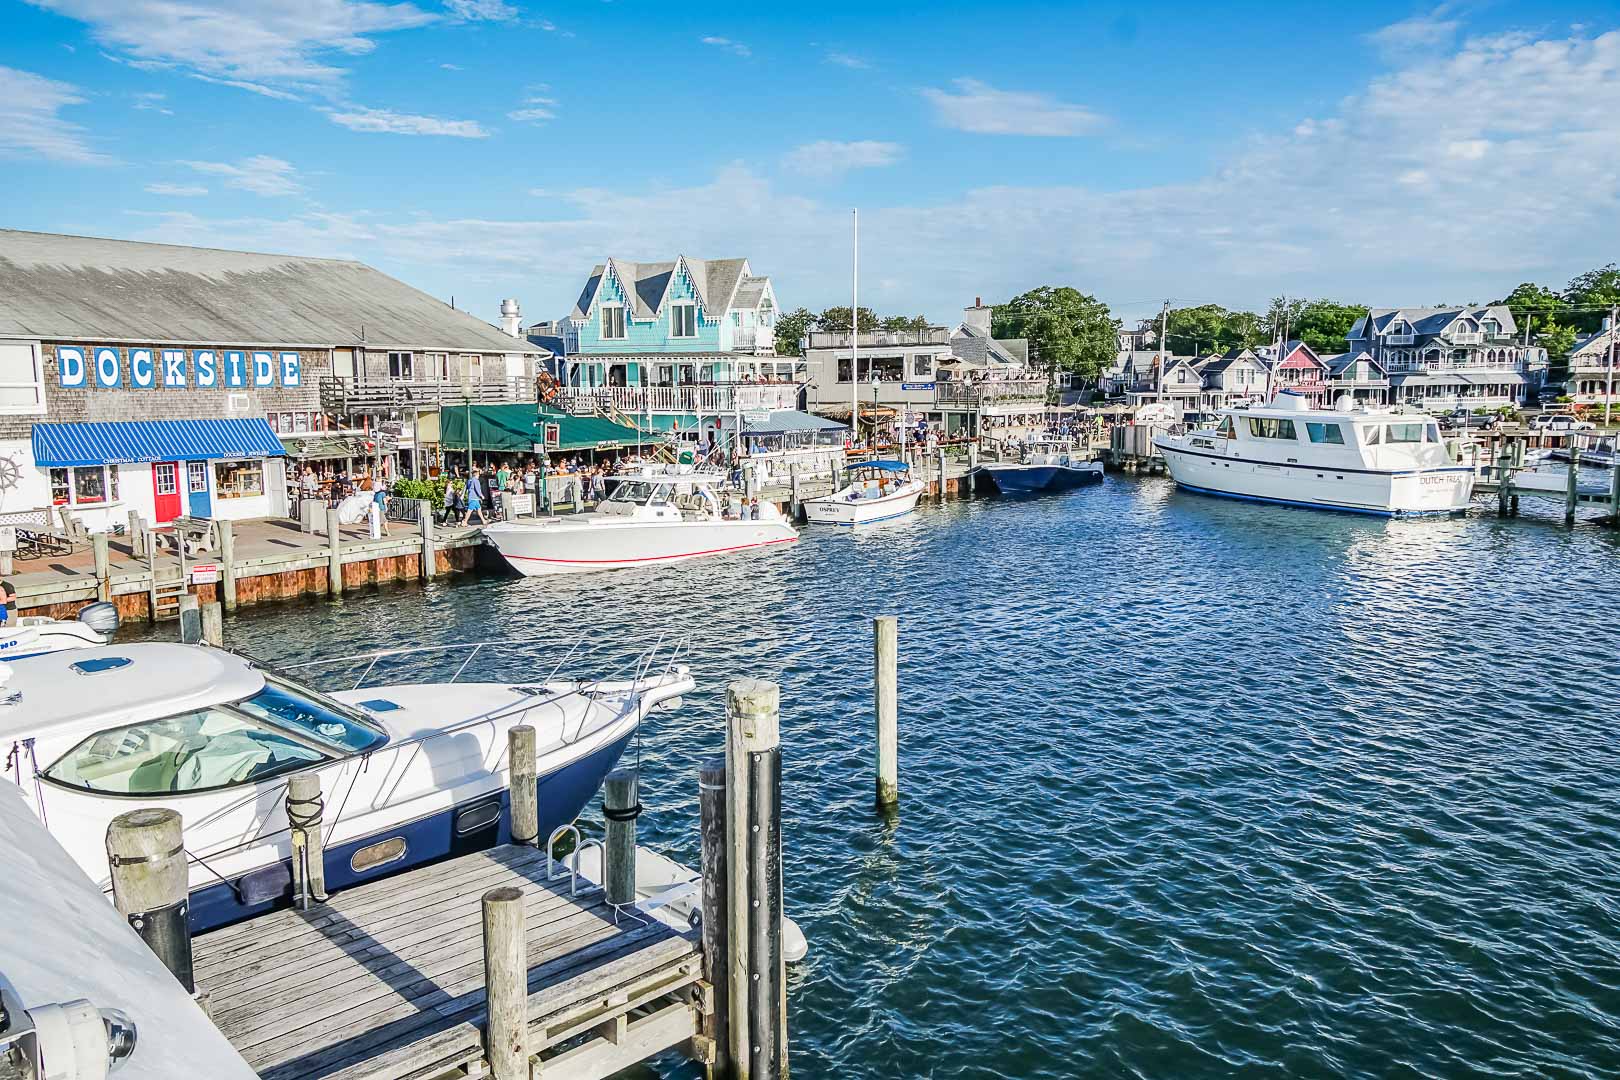 Scenic attractions with boat docks at VRI's Harbor Landing Resort in Massachusetts.